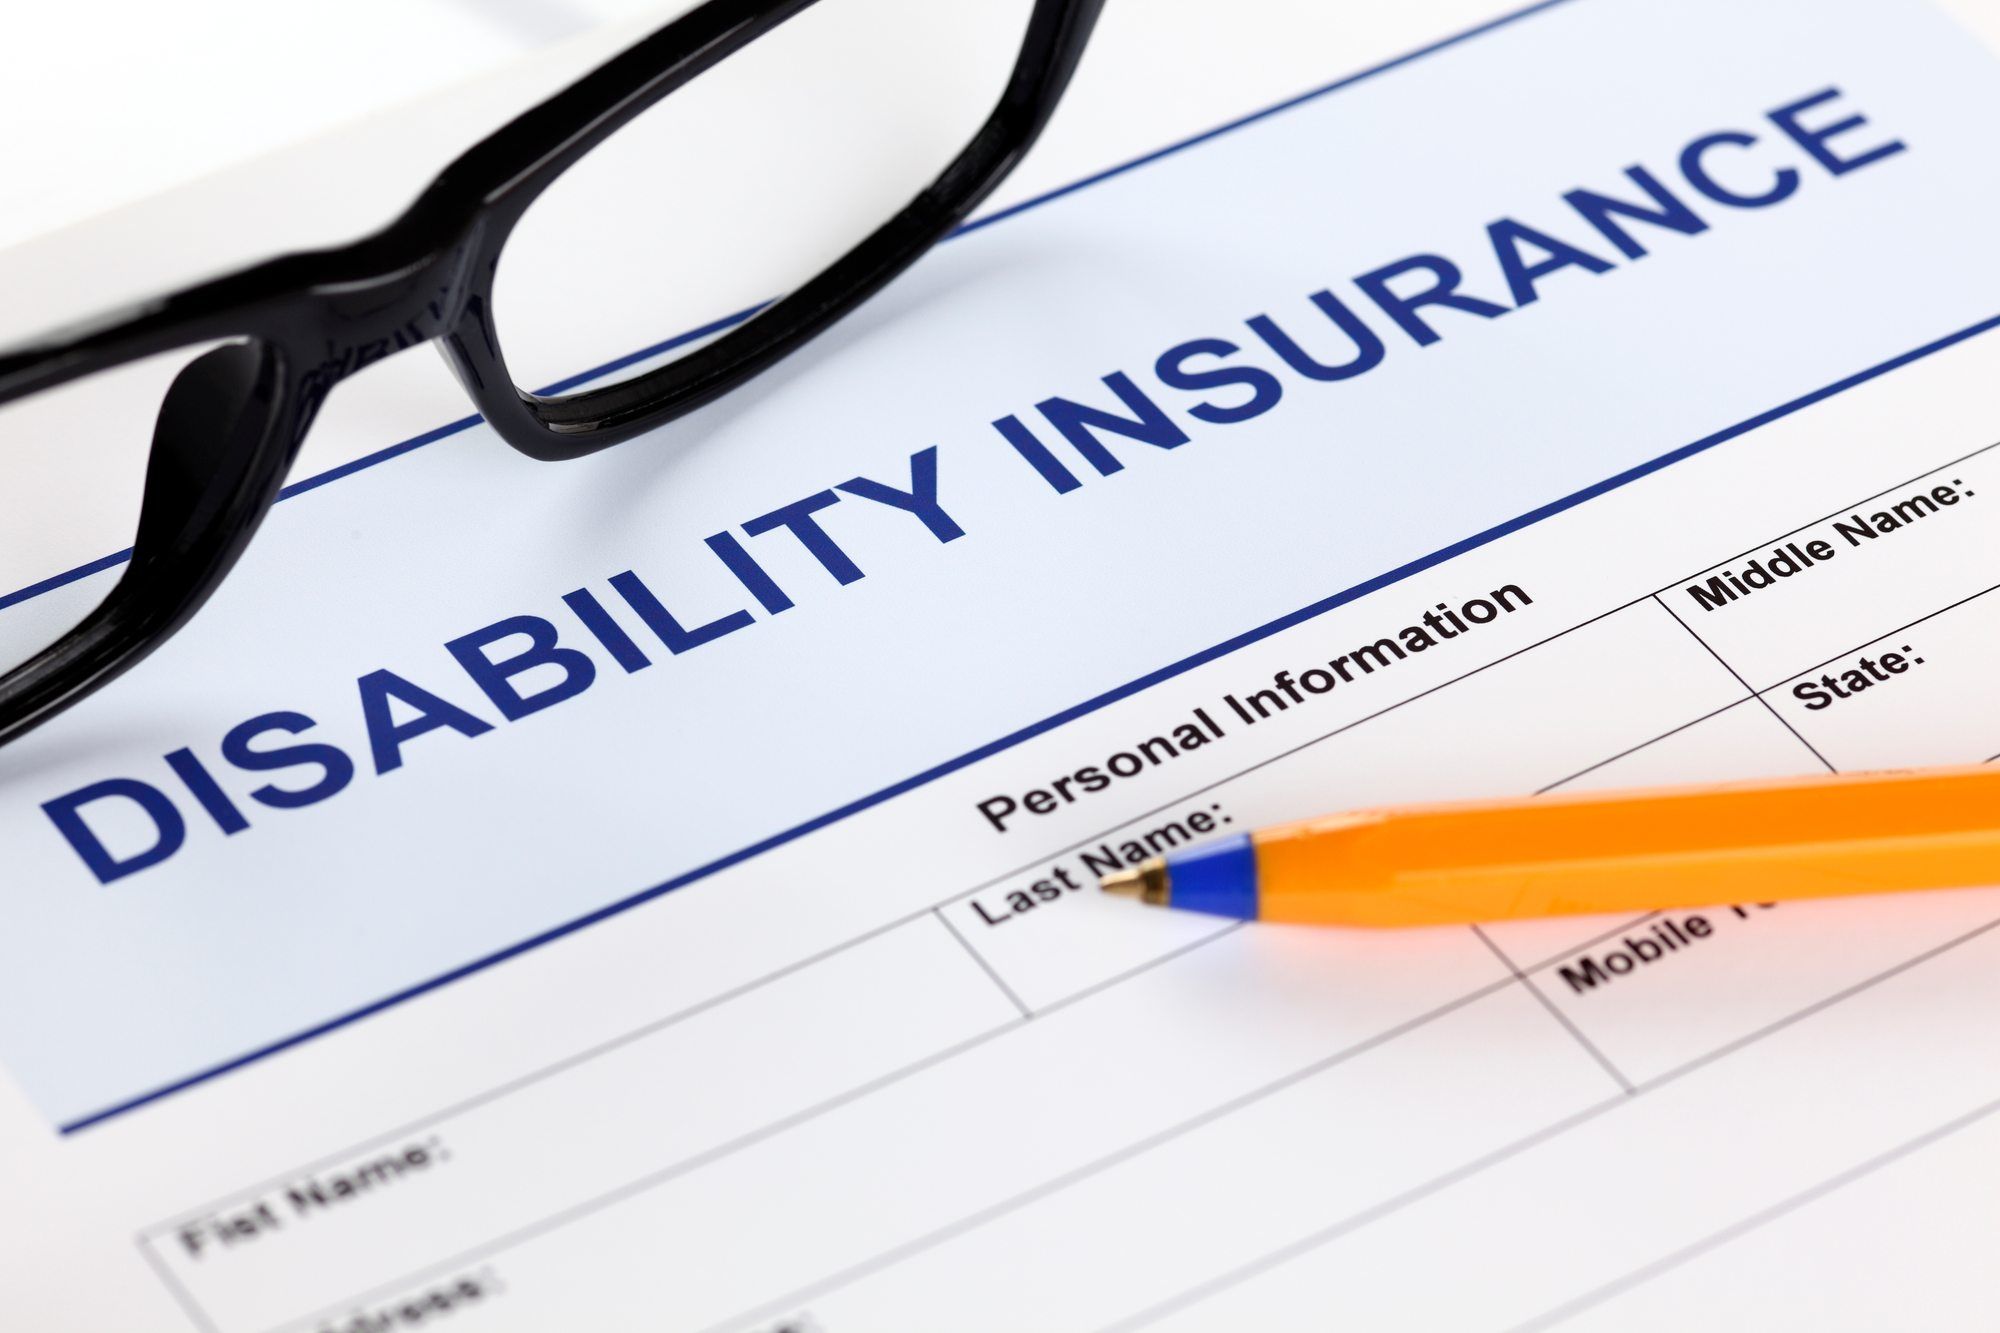 Cigna disability insurance diana roa amerigroup